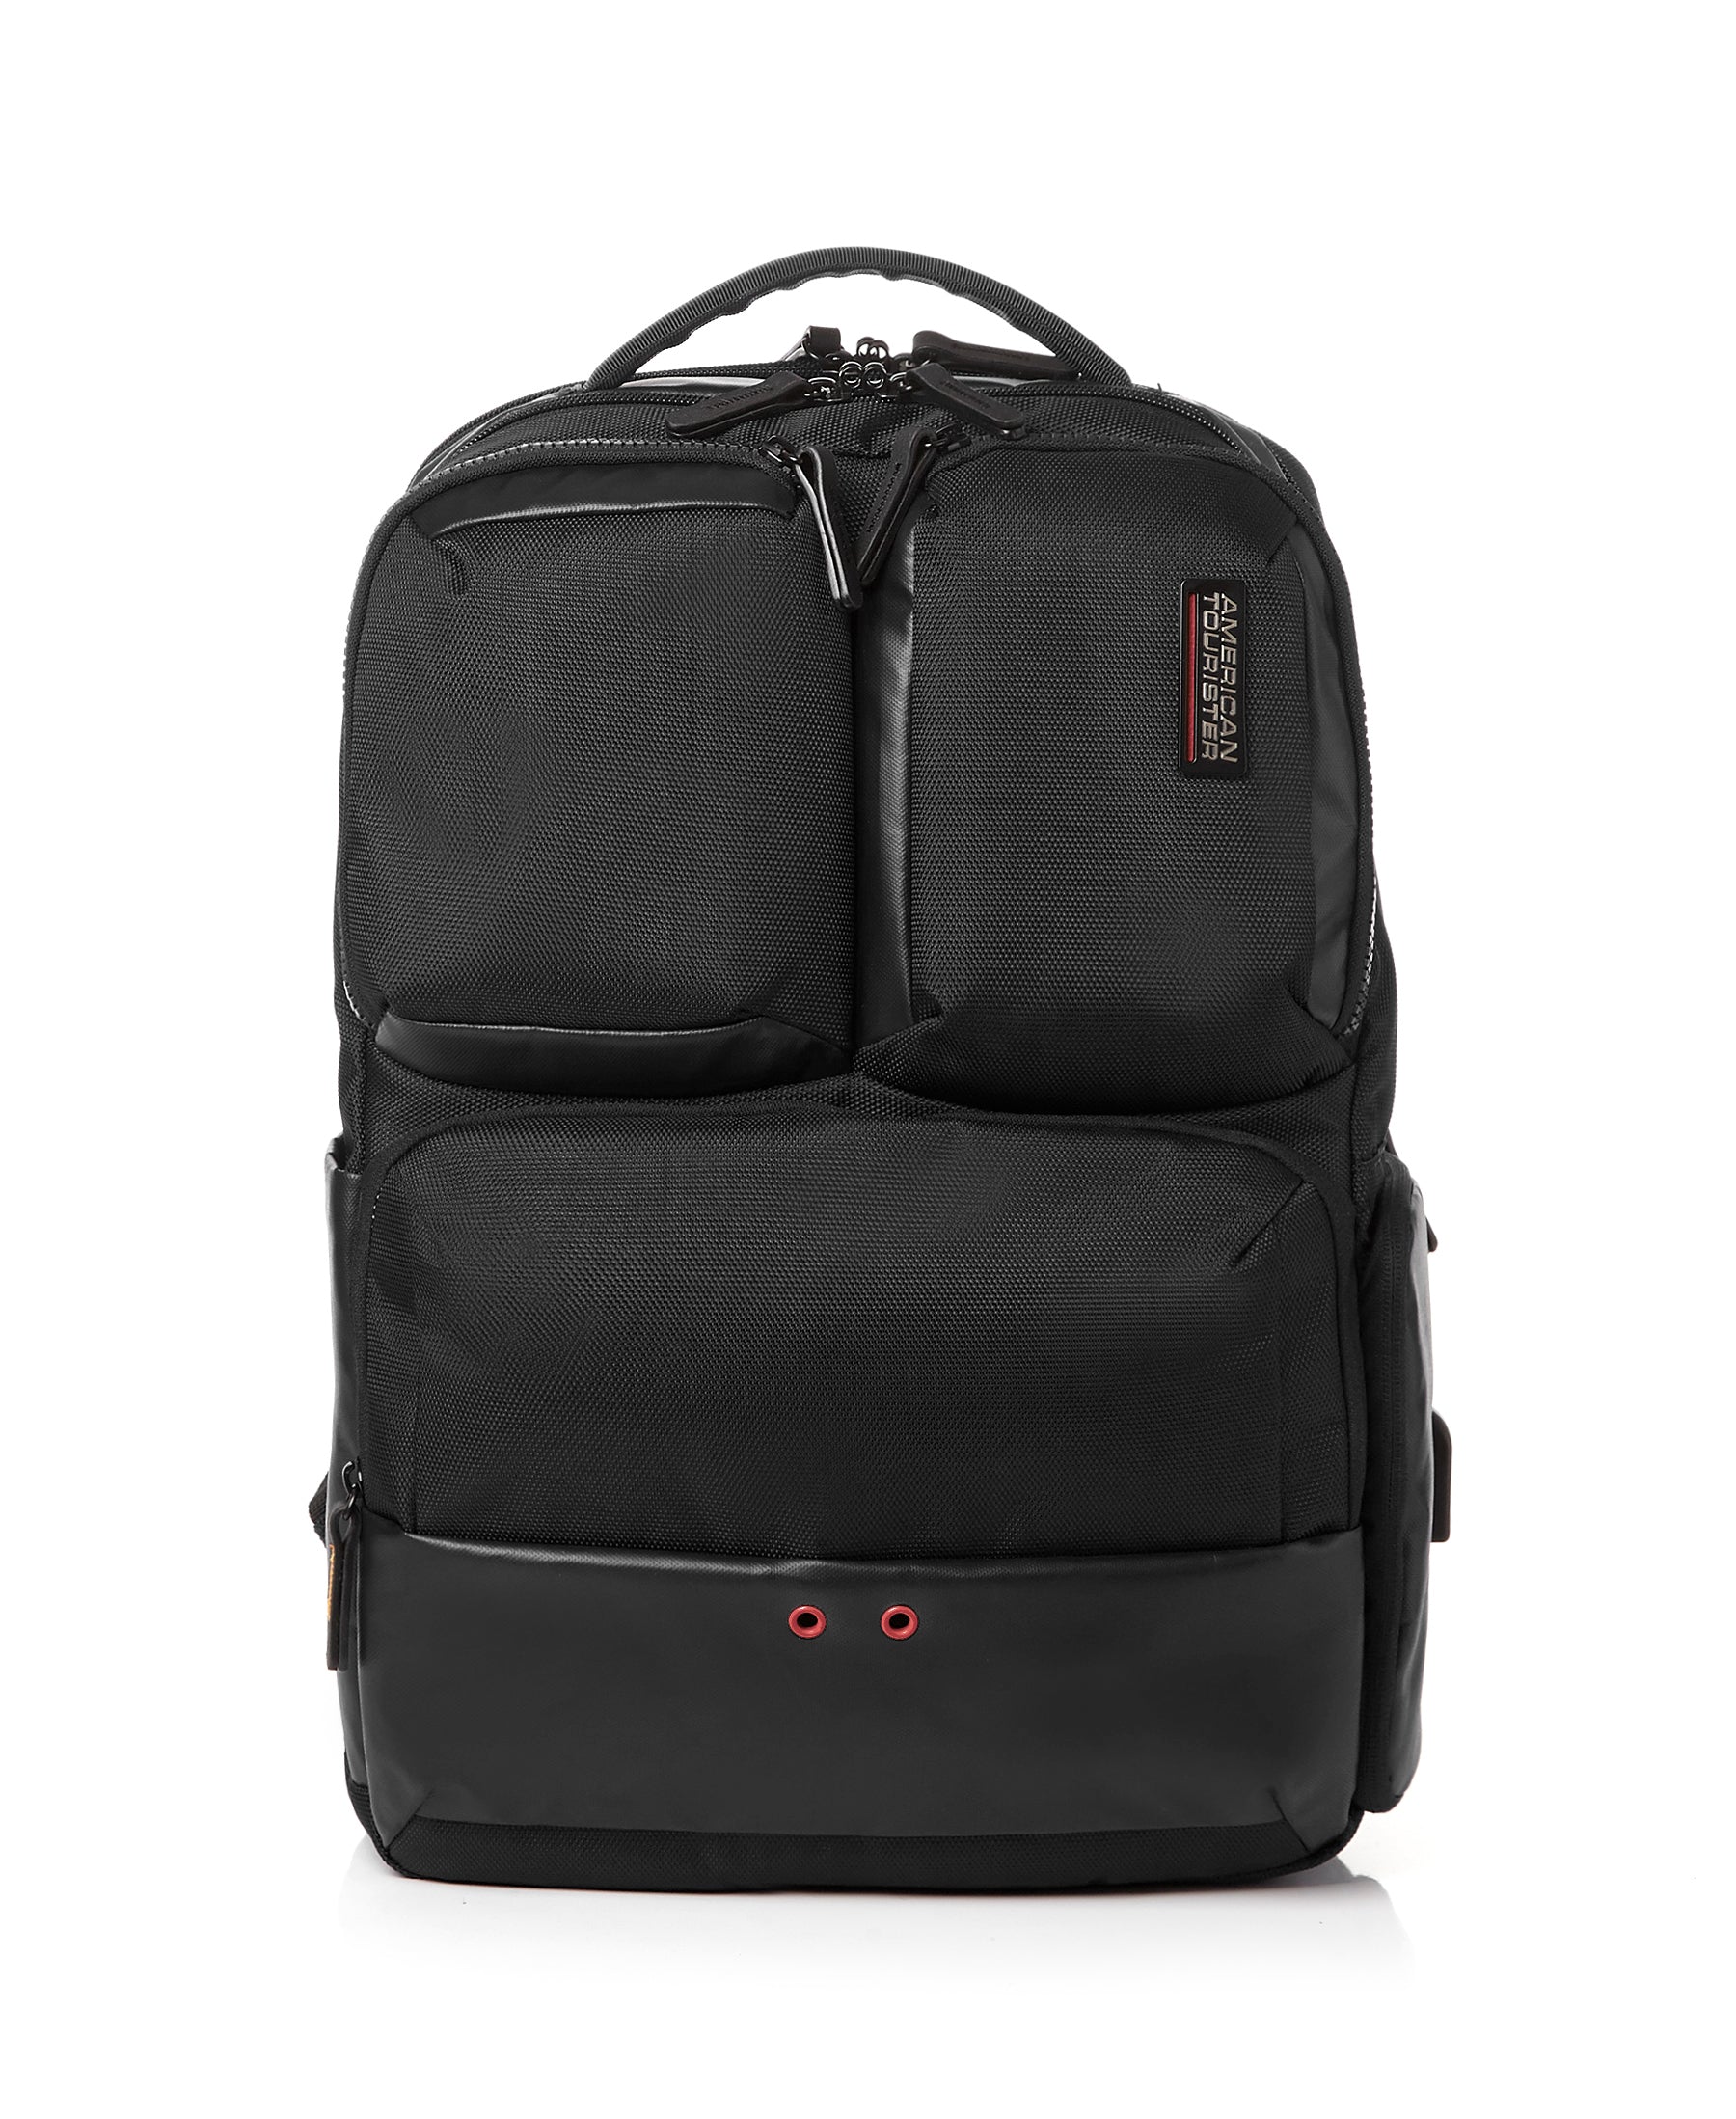 American Tourister - ZORK Backpack 2 AS - Black - 0